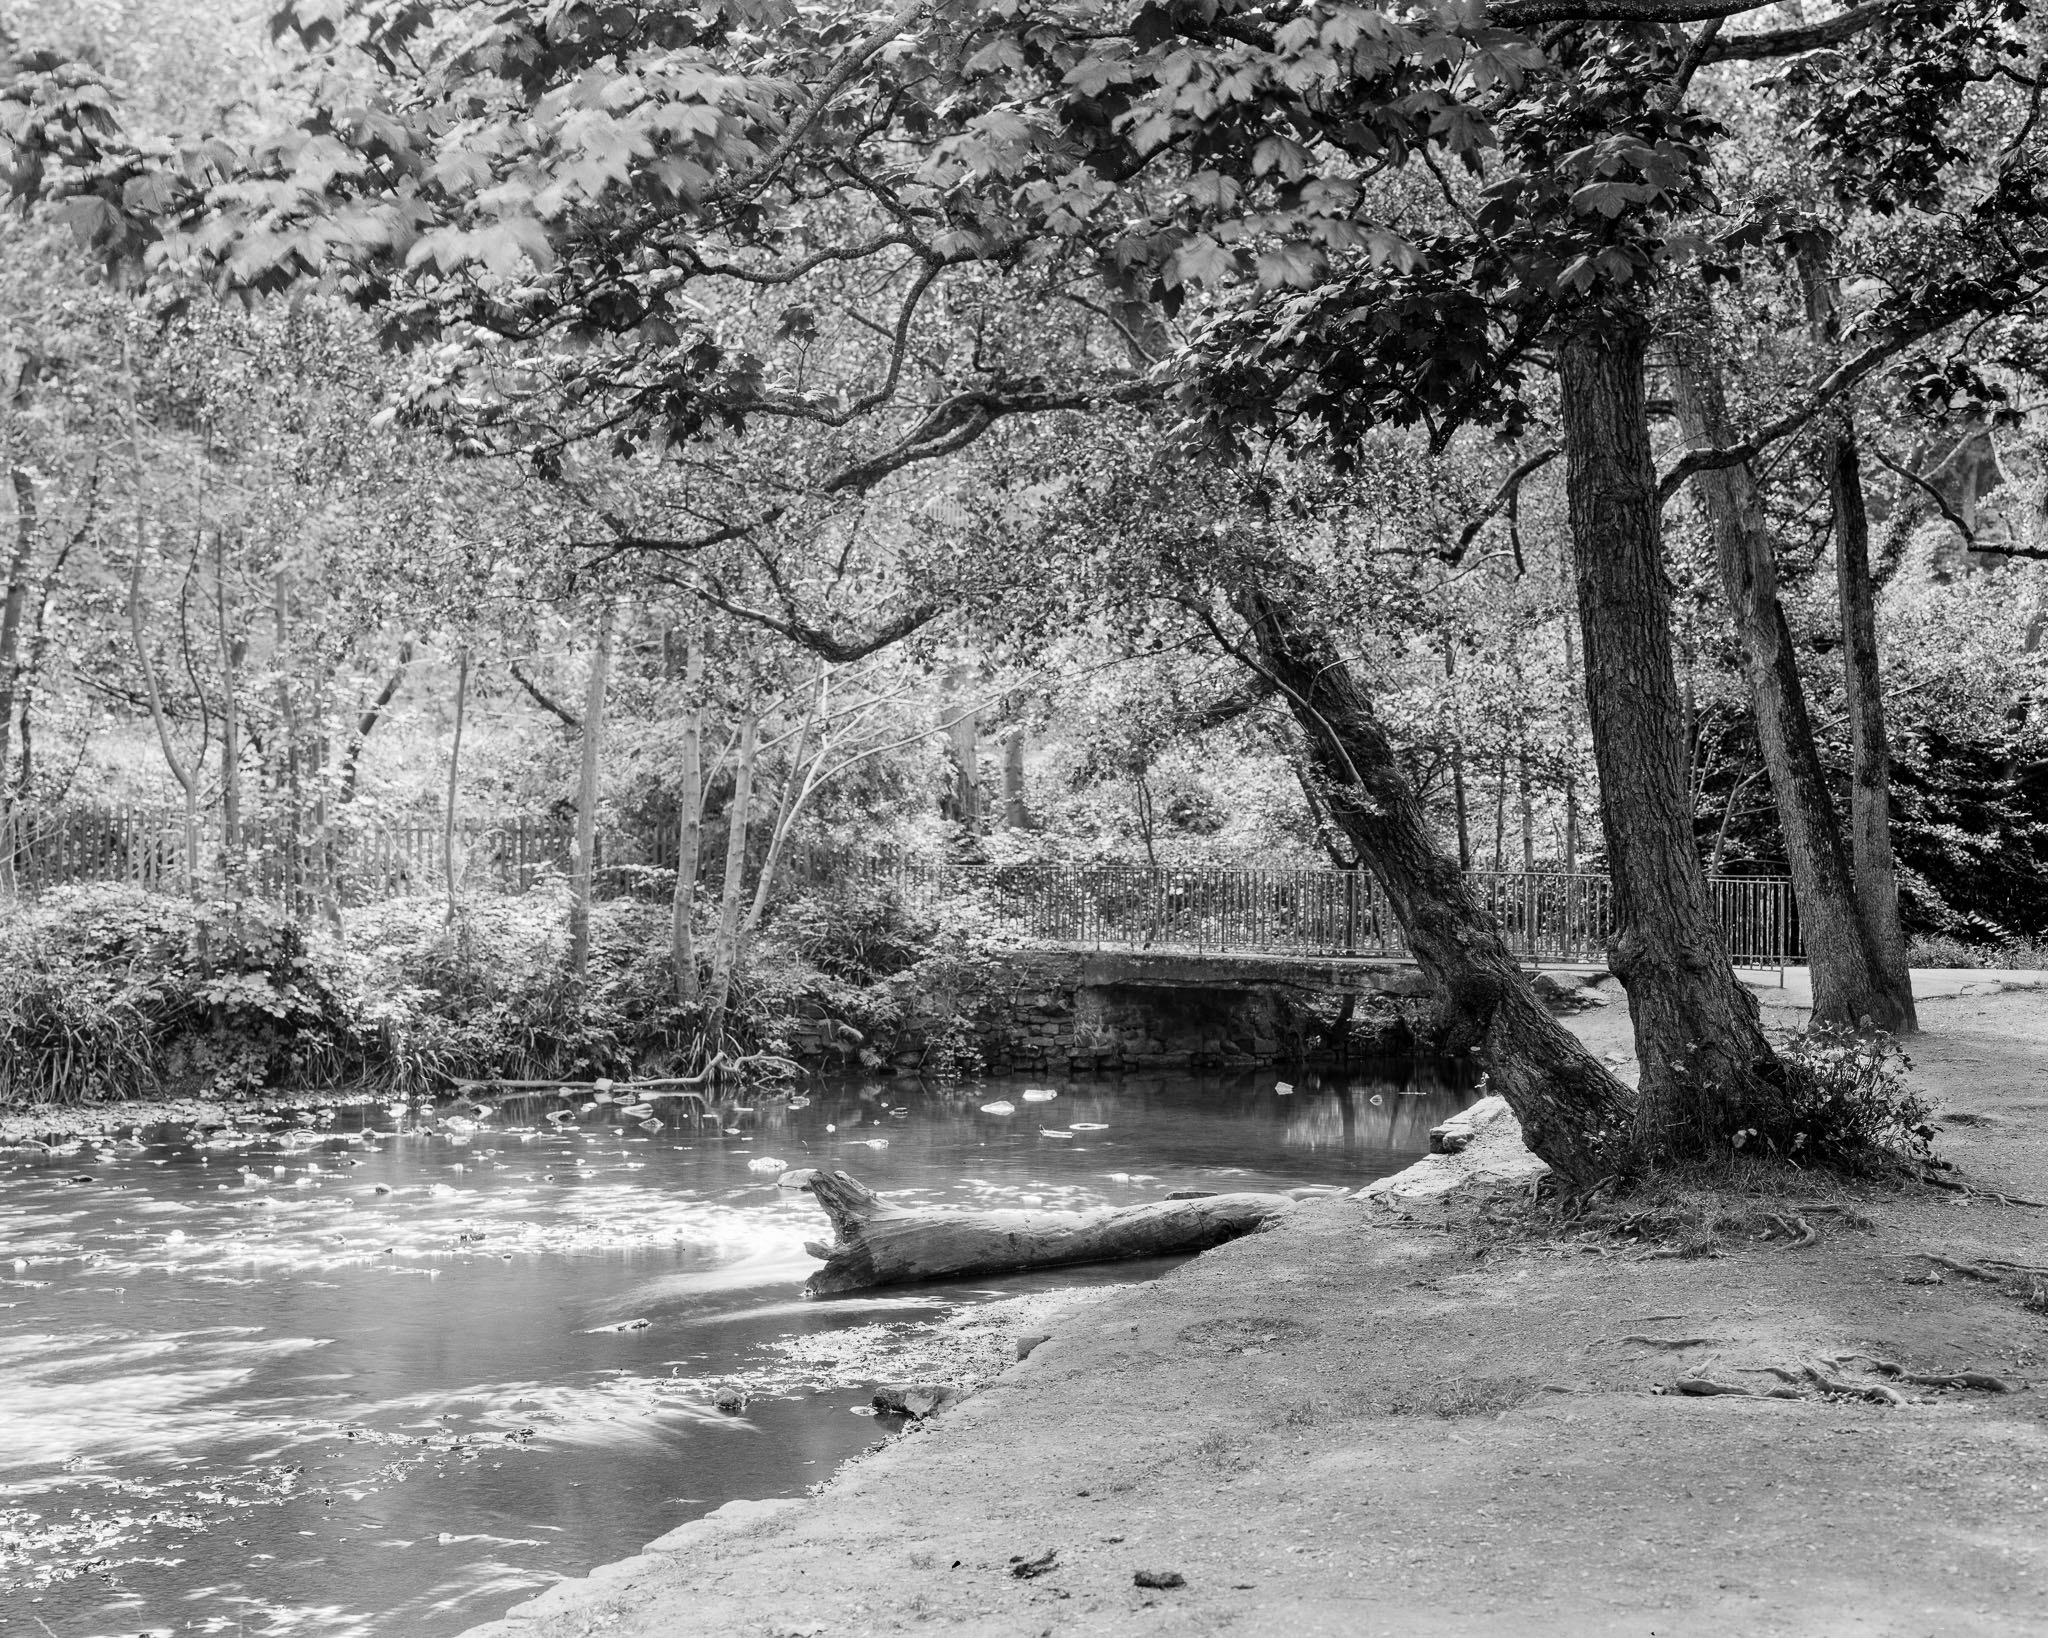 Black and White Photo taken at Millhouses Park Sheffield, showing bridge across River Sheaf